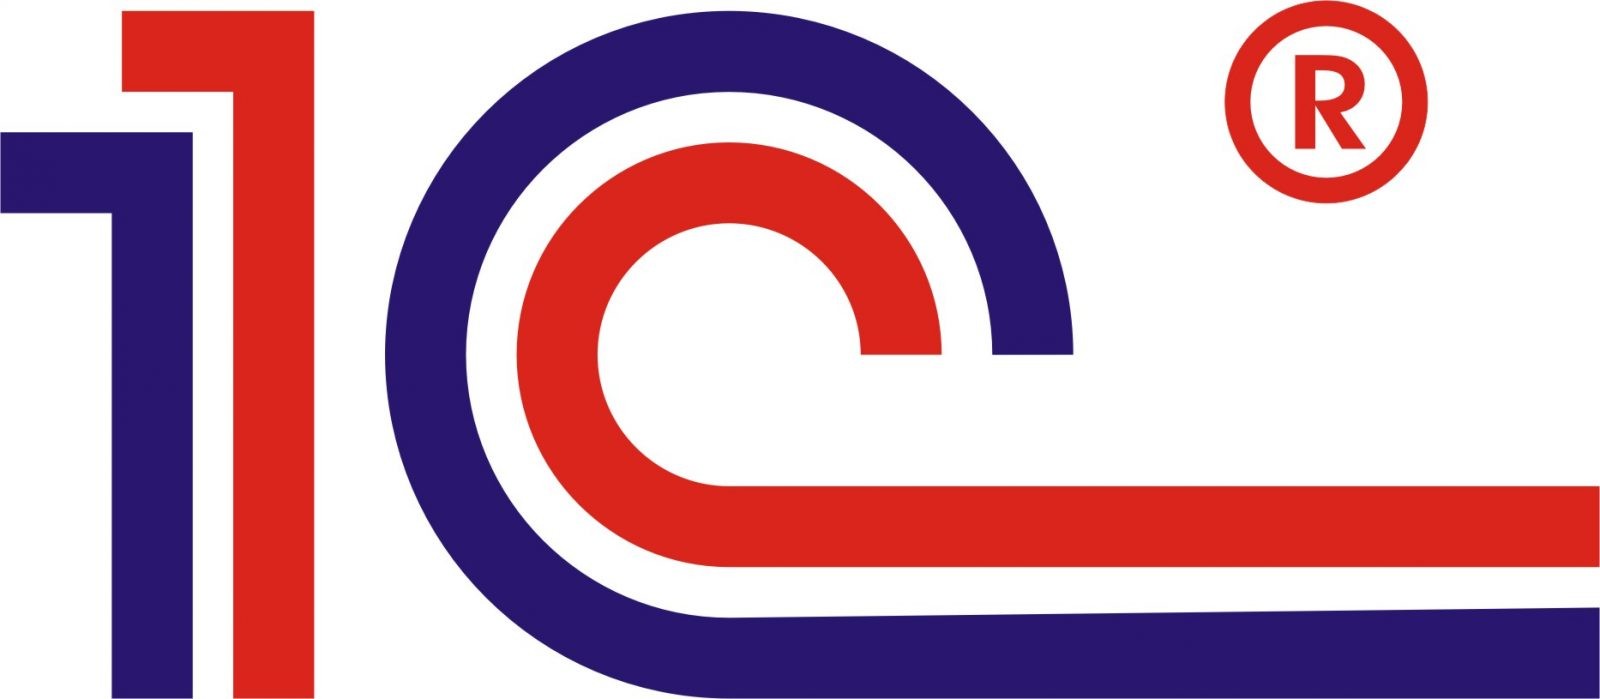 Логотип компании 1С